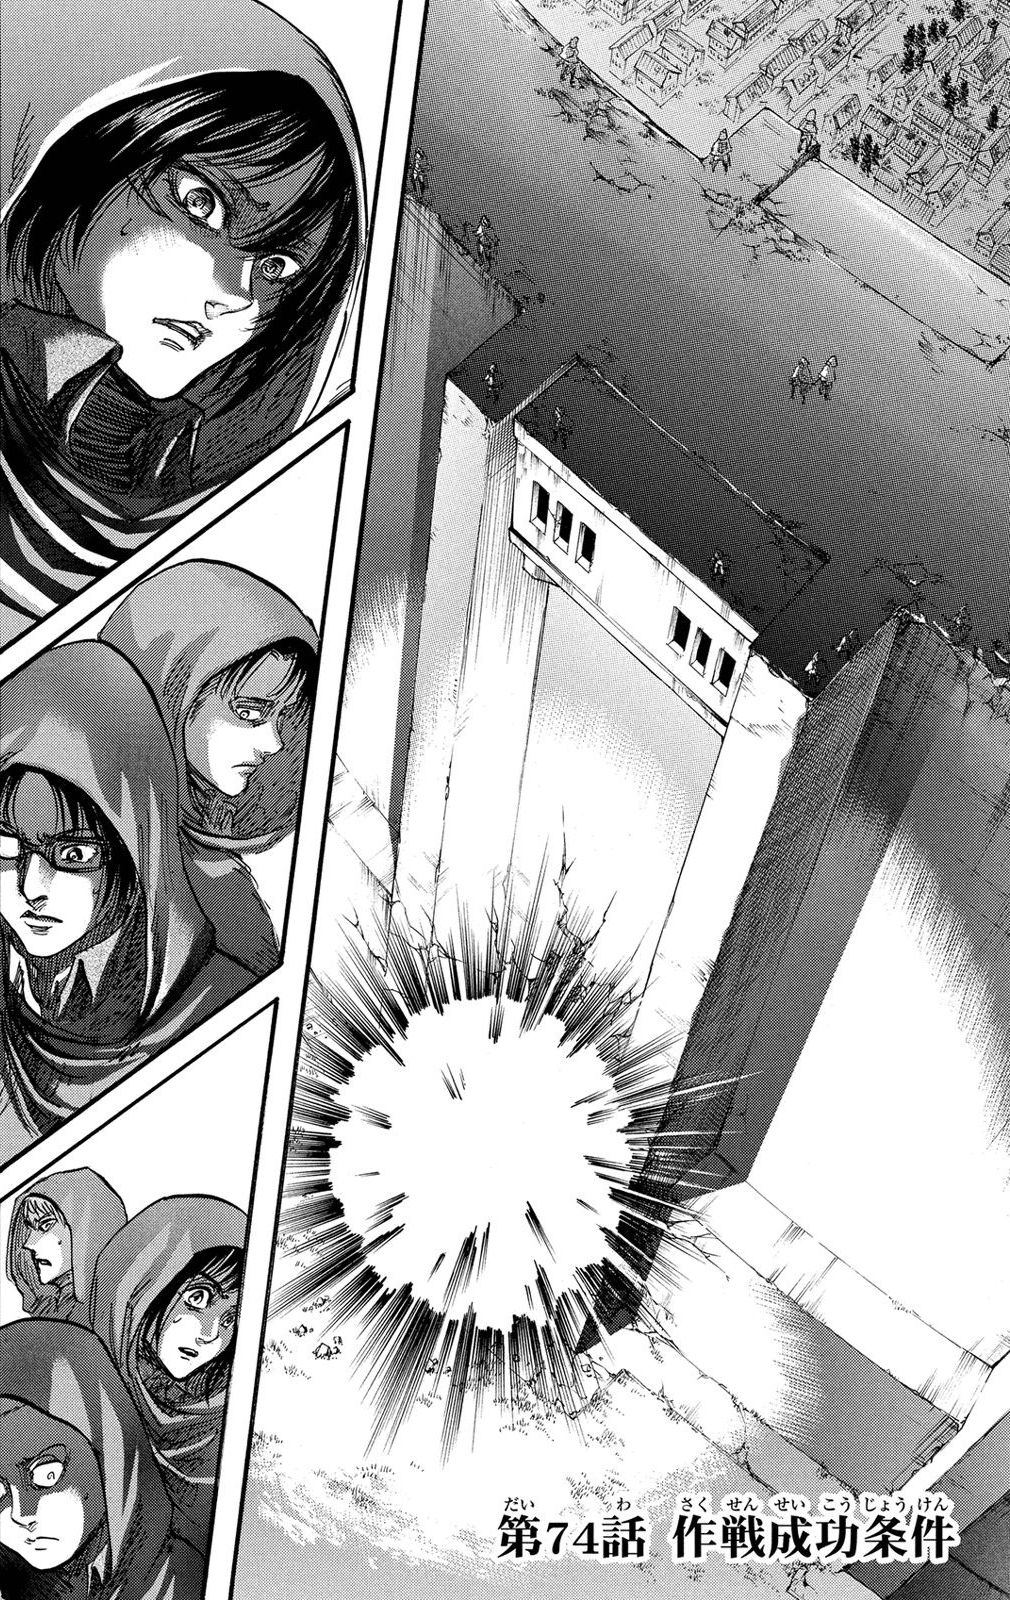 A Hole In The Wall Manga Return to Shiganshina arc | Attack on Titan Wiki | Fandom